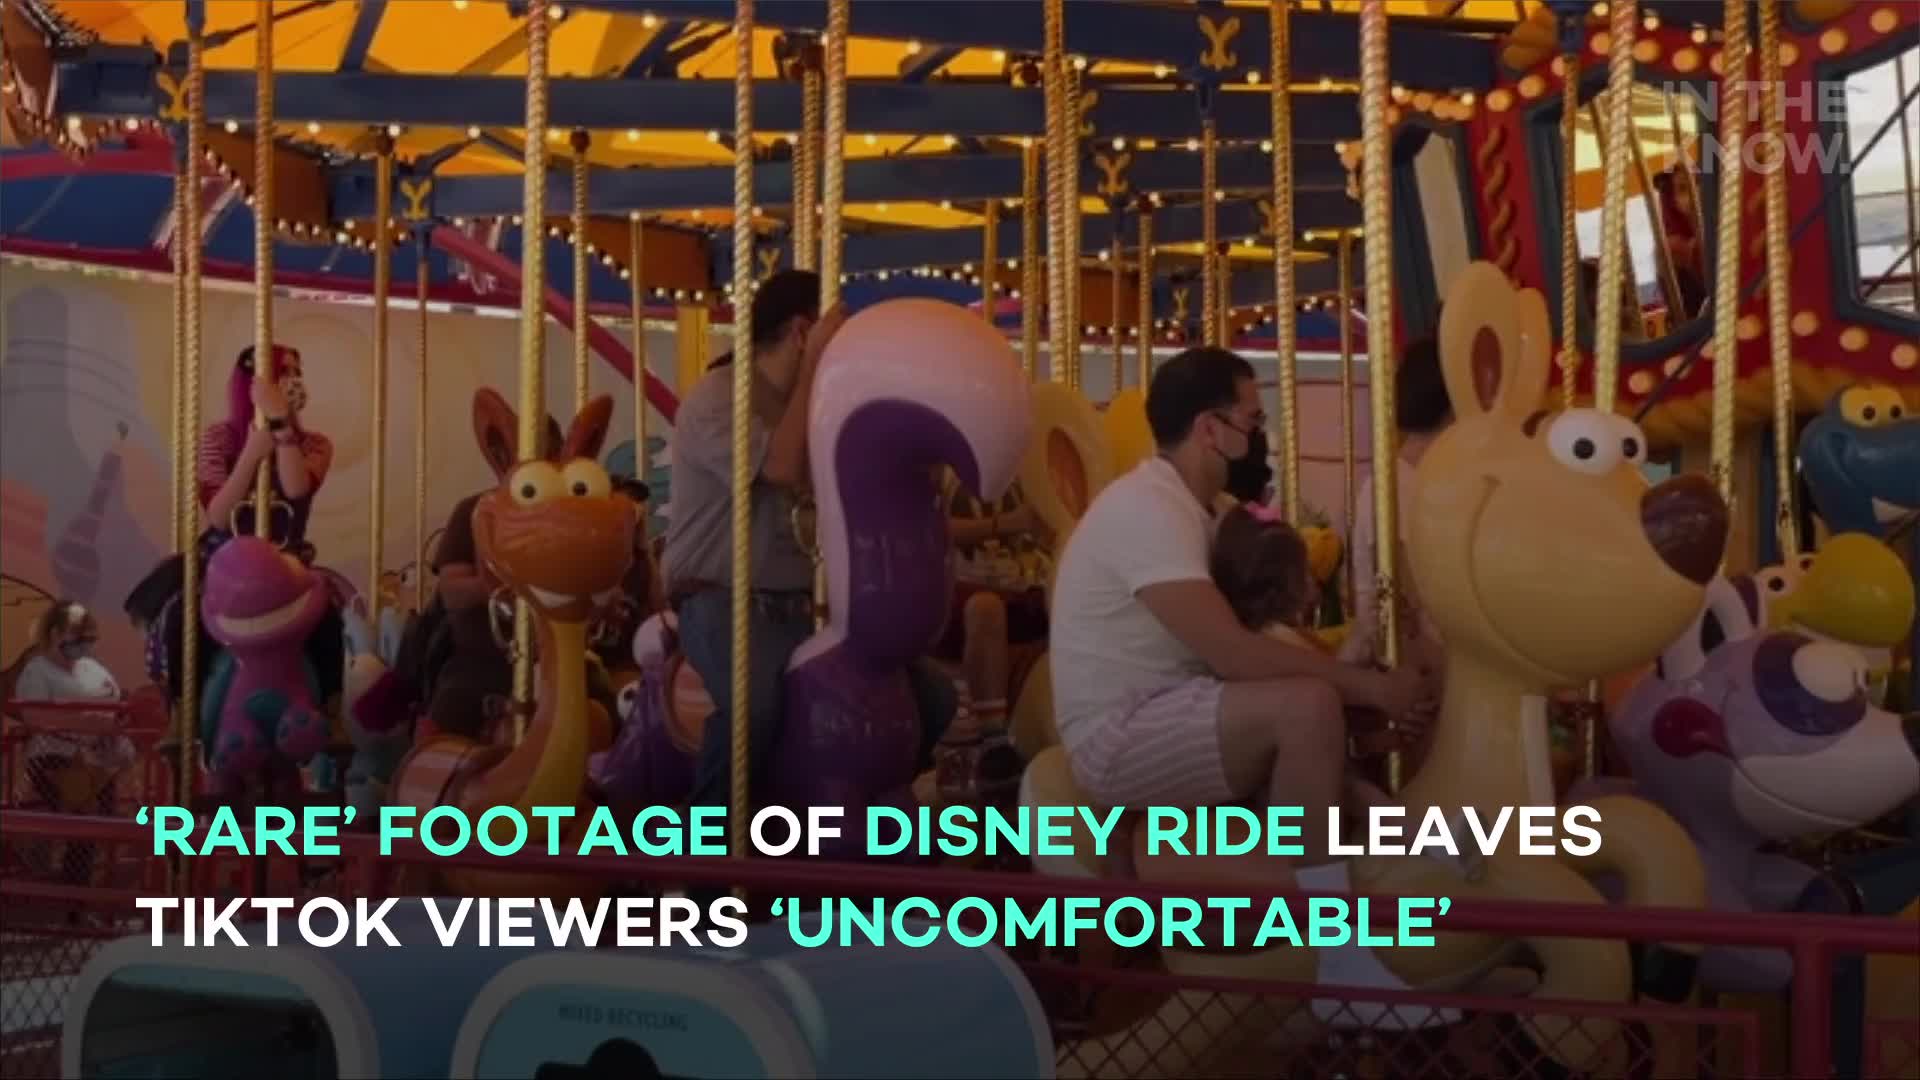 See Disney's Rock 'N' Roller Coaster With Lights on in Viral TikTok